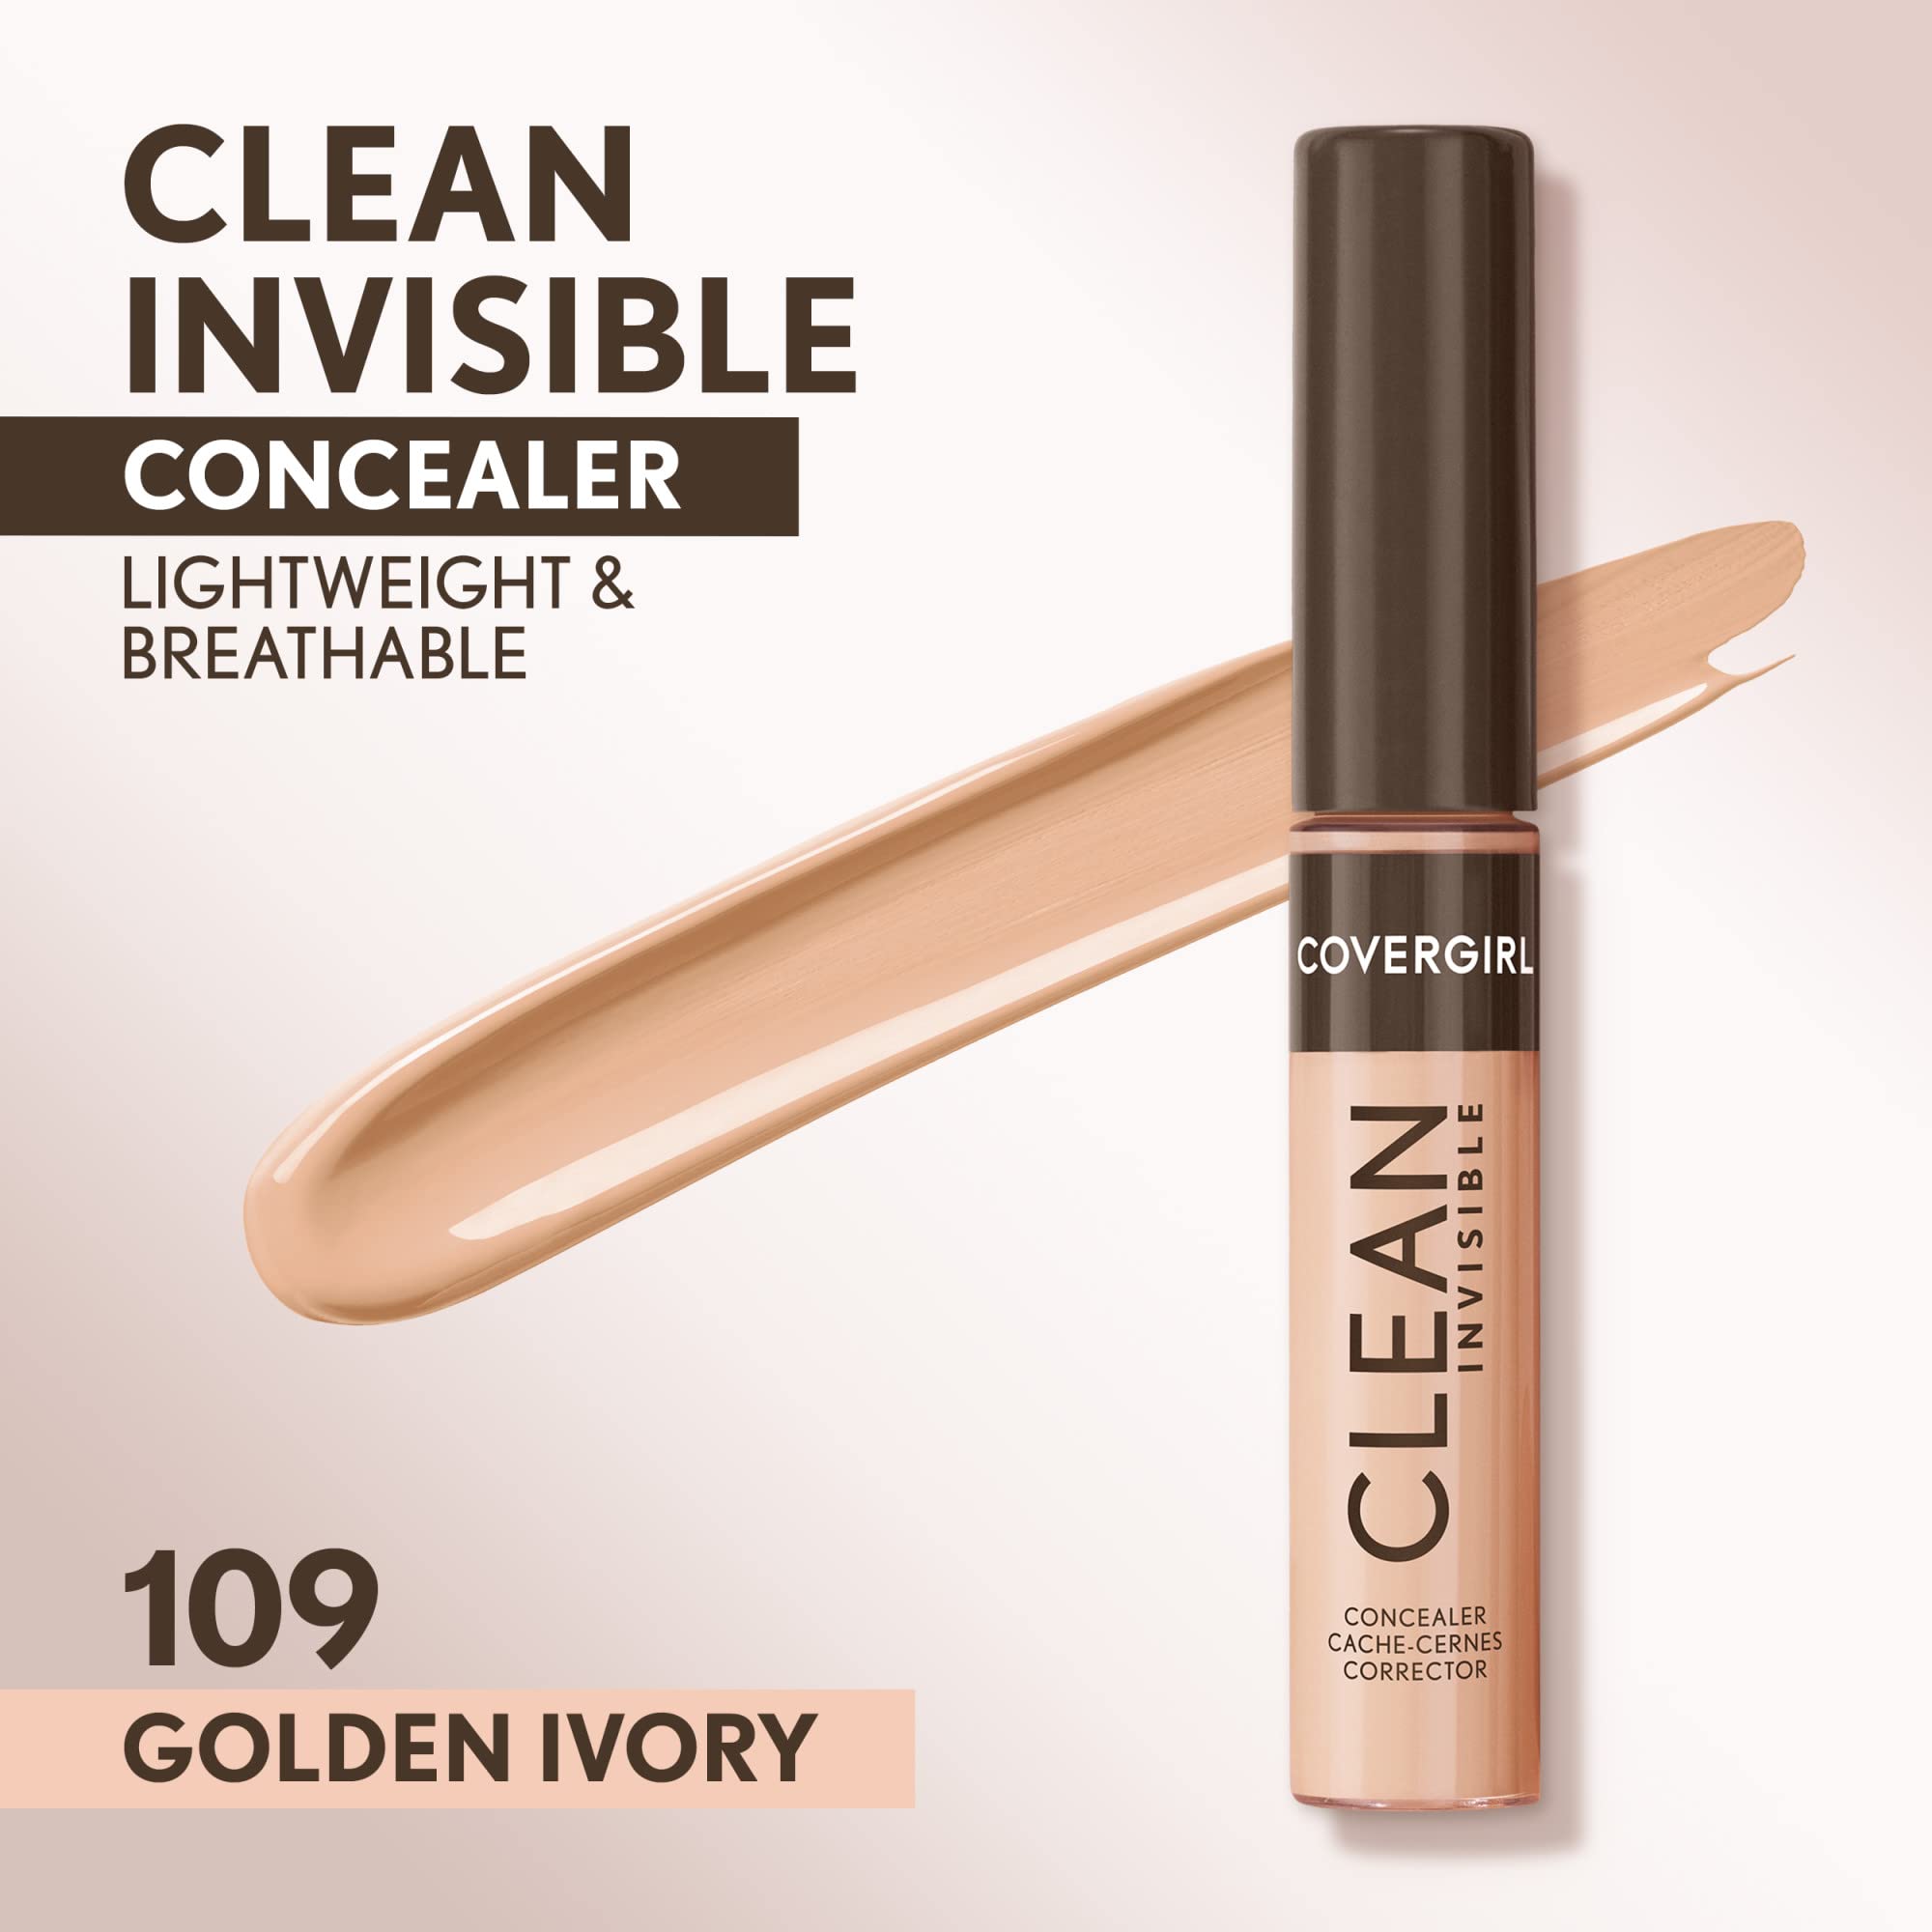 Covergirl Clean Invisible Concealer, Lightweight, Hydrating, Vegan Formula, Golden Ivory 109, 0.23oz